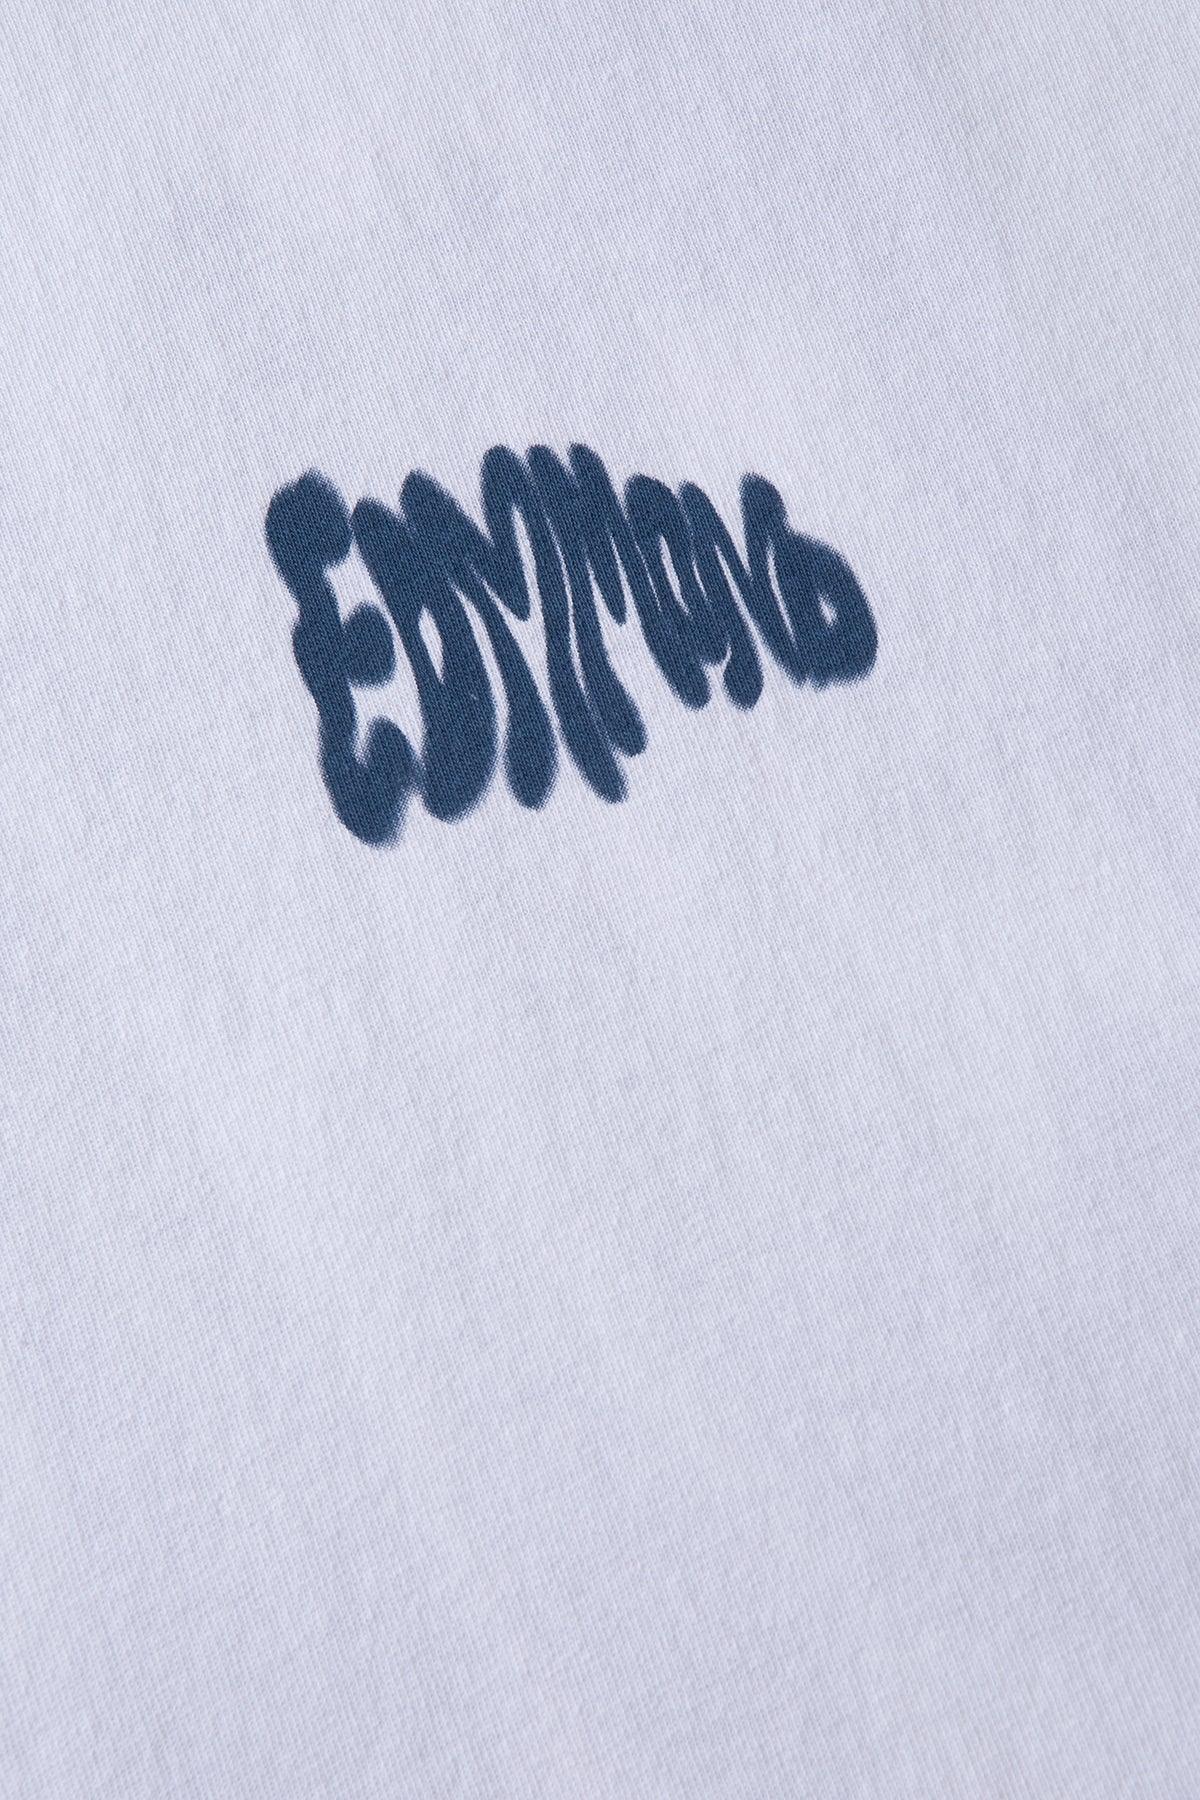 Camiseta Edmmond Studios Periscope Plain White - ECRU